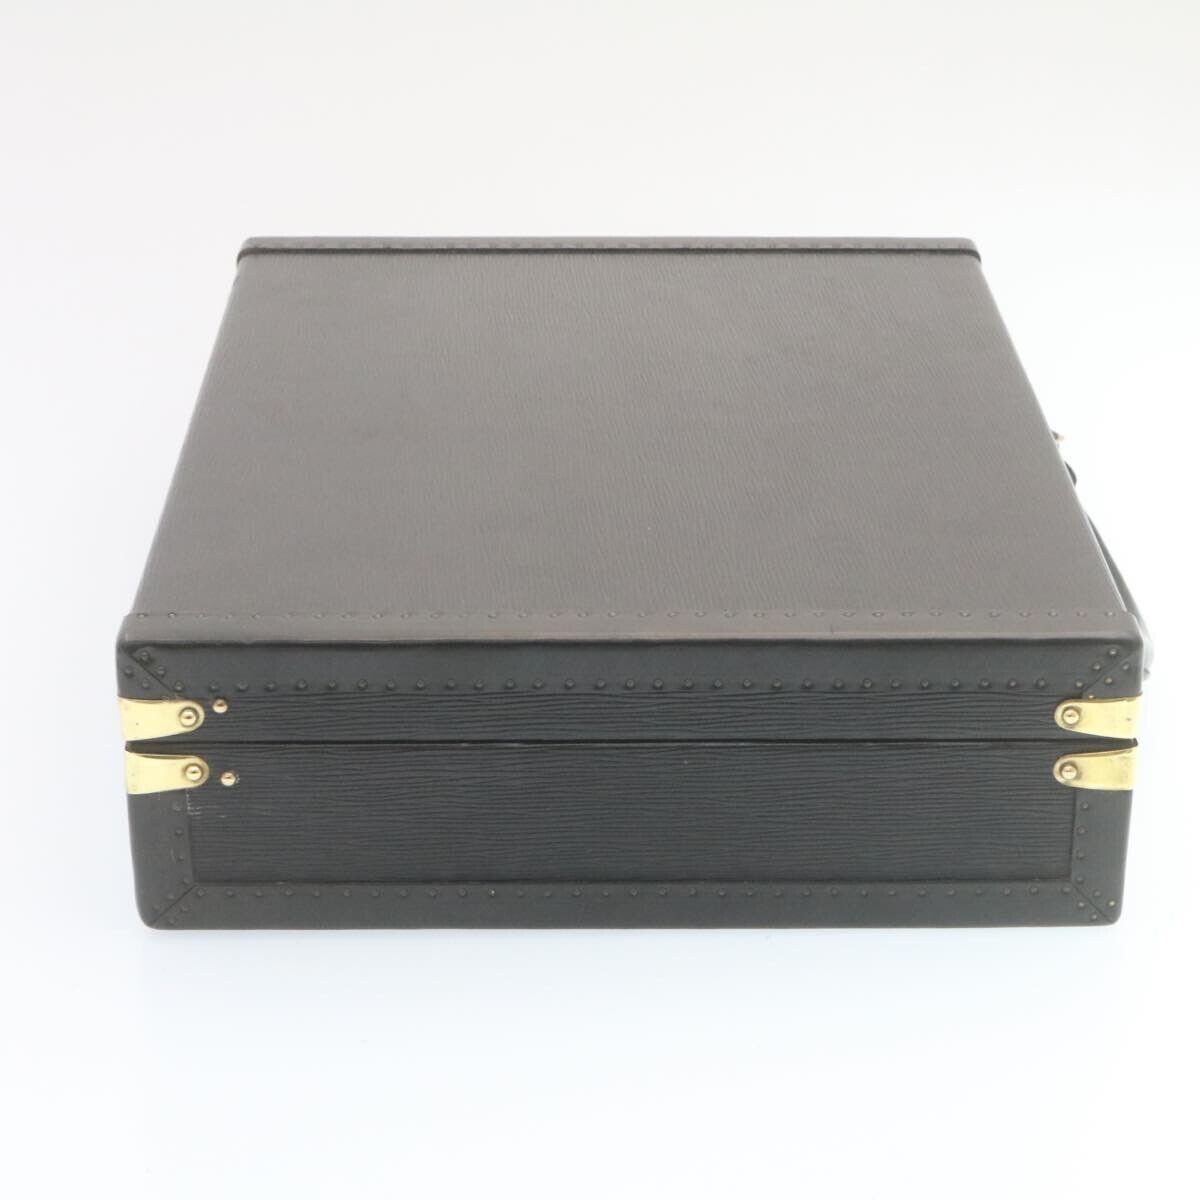 LOUIS VUITTON Epi Robusto 1 Compartment Briefcase Black W/ KEYS (1073044)